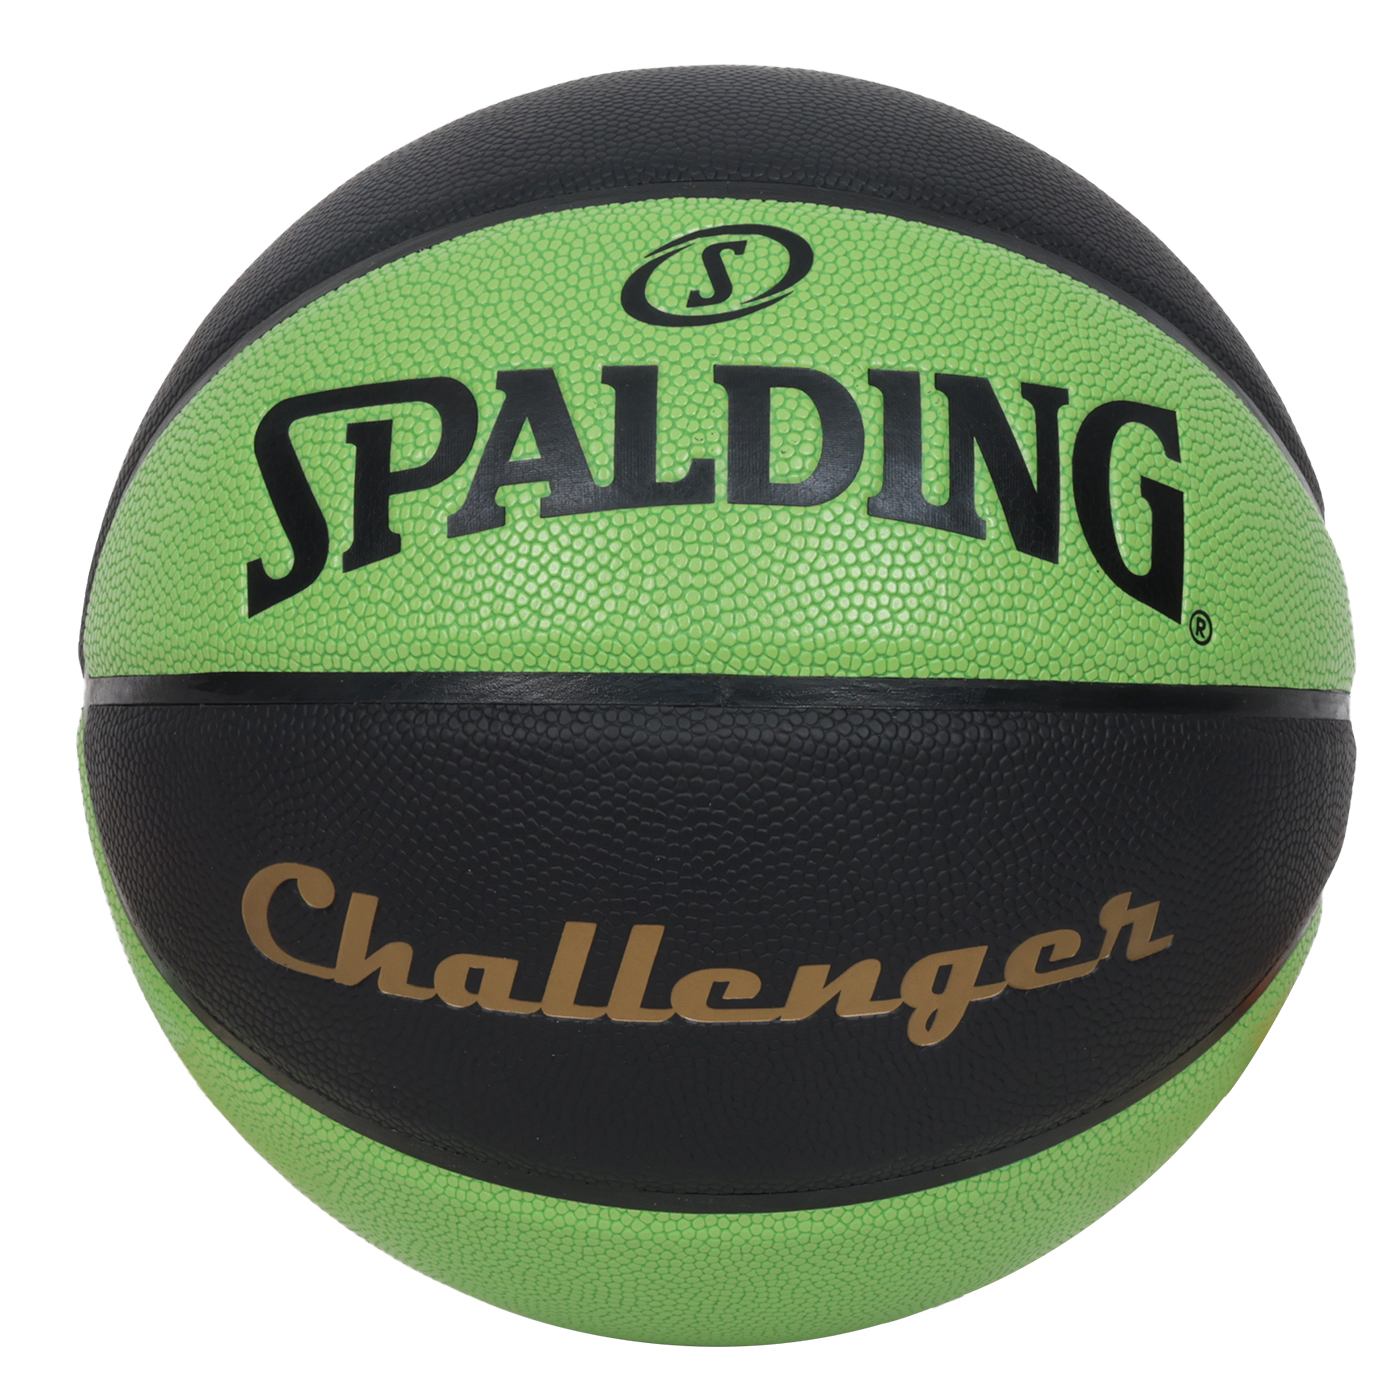 SPALDING Challenger系列#7合成皮籃球  SPB1132B7 - 綠黑金